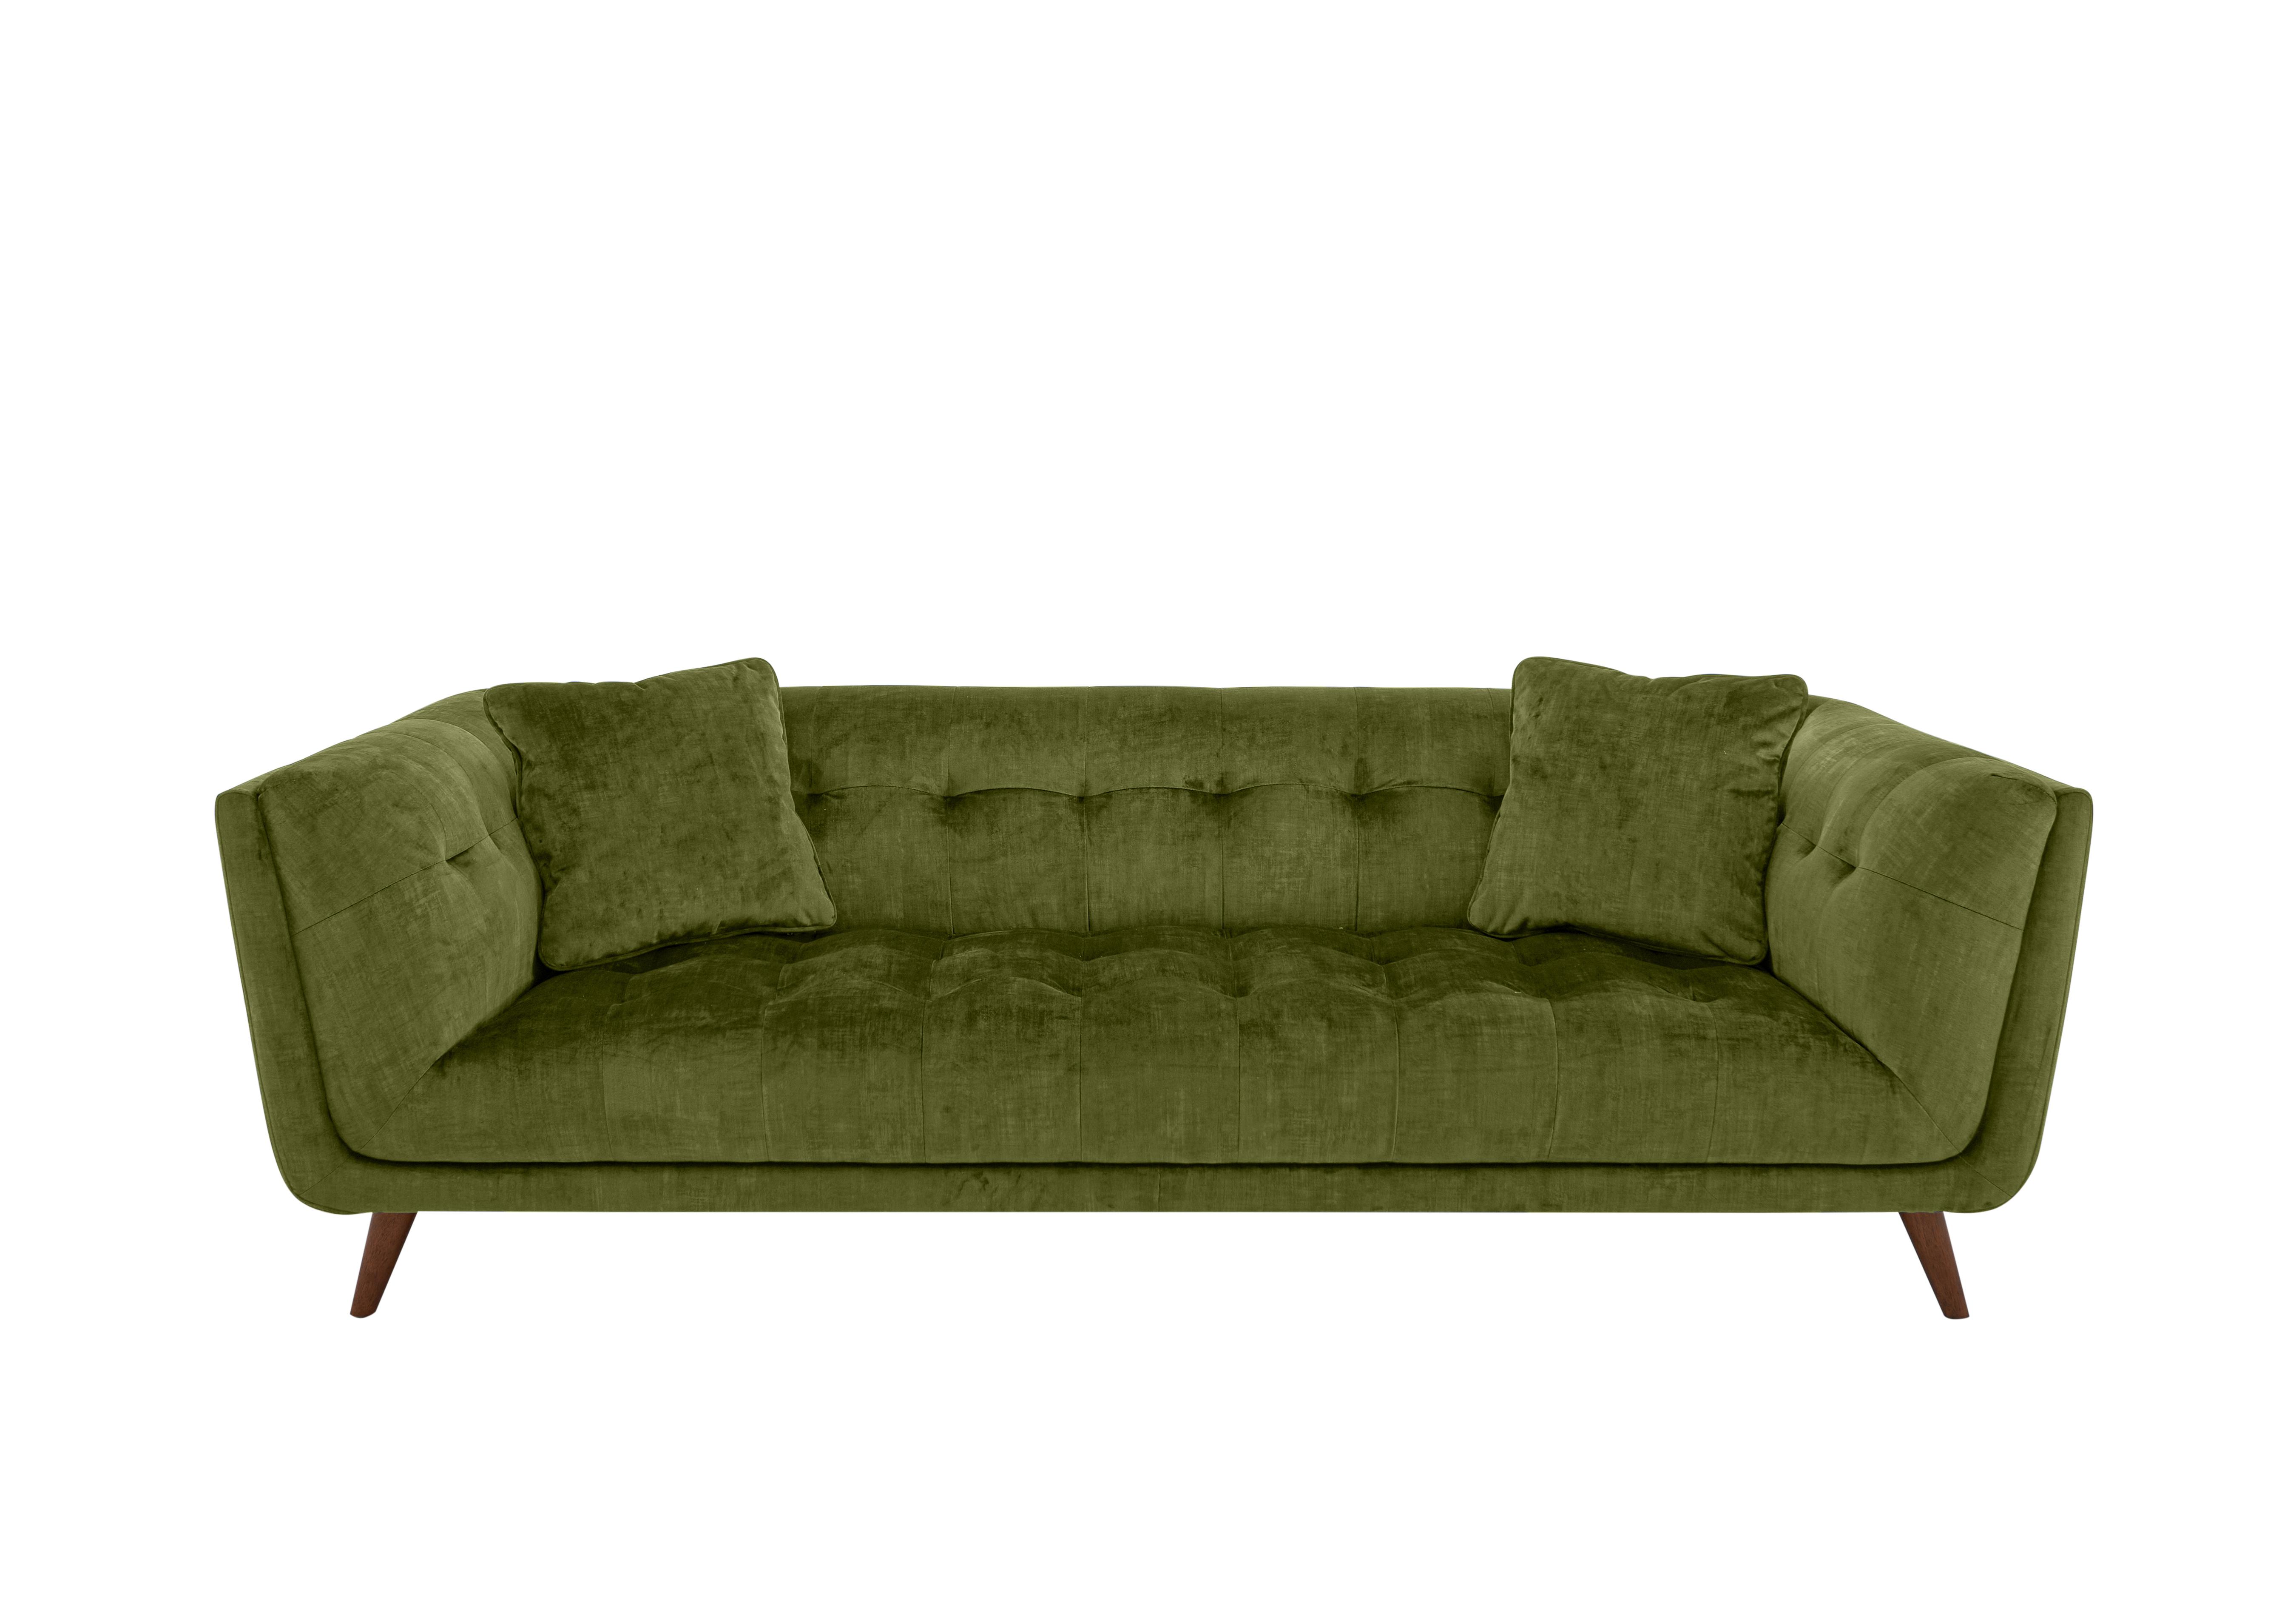 Rene 3 Seater Fabric Sofa in 52003 Heritage Olive Wa Ft on Furniture Village